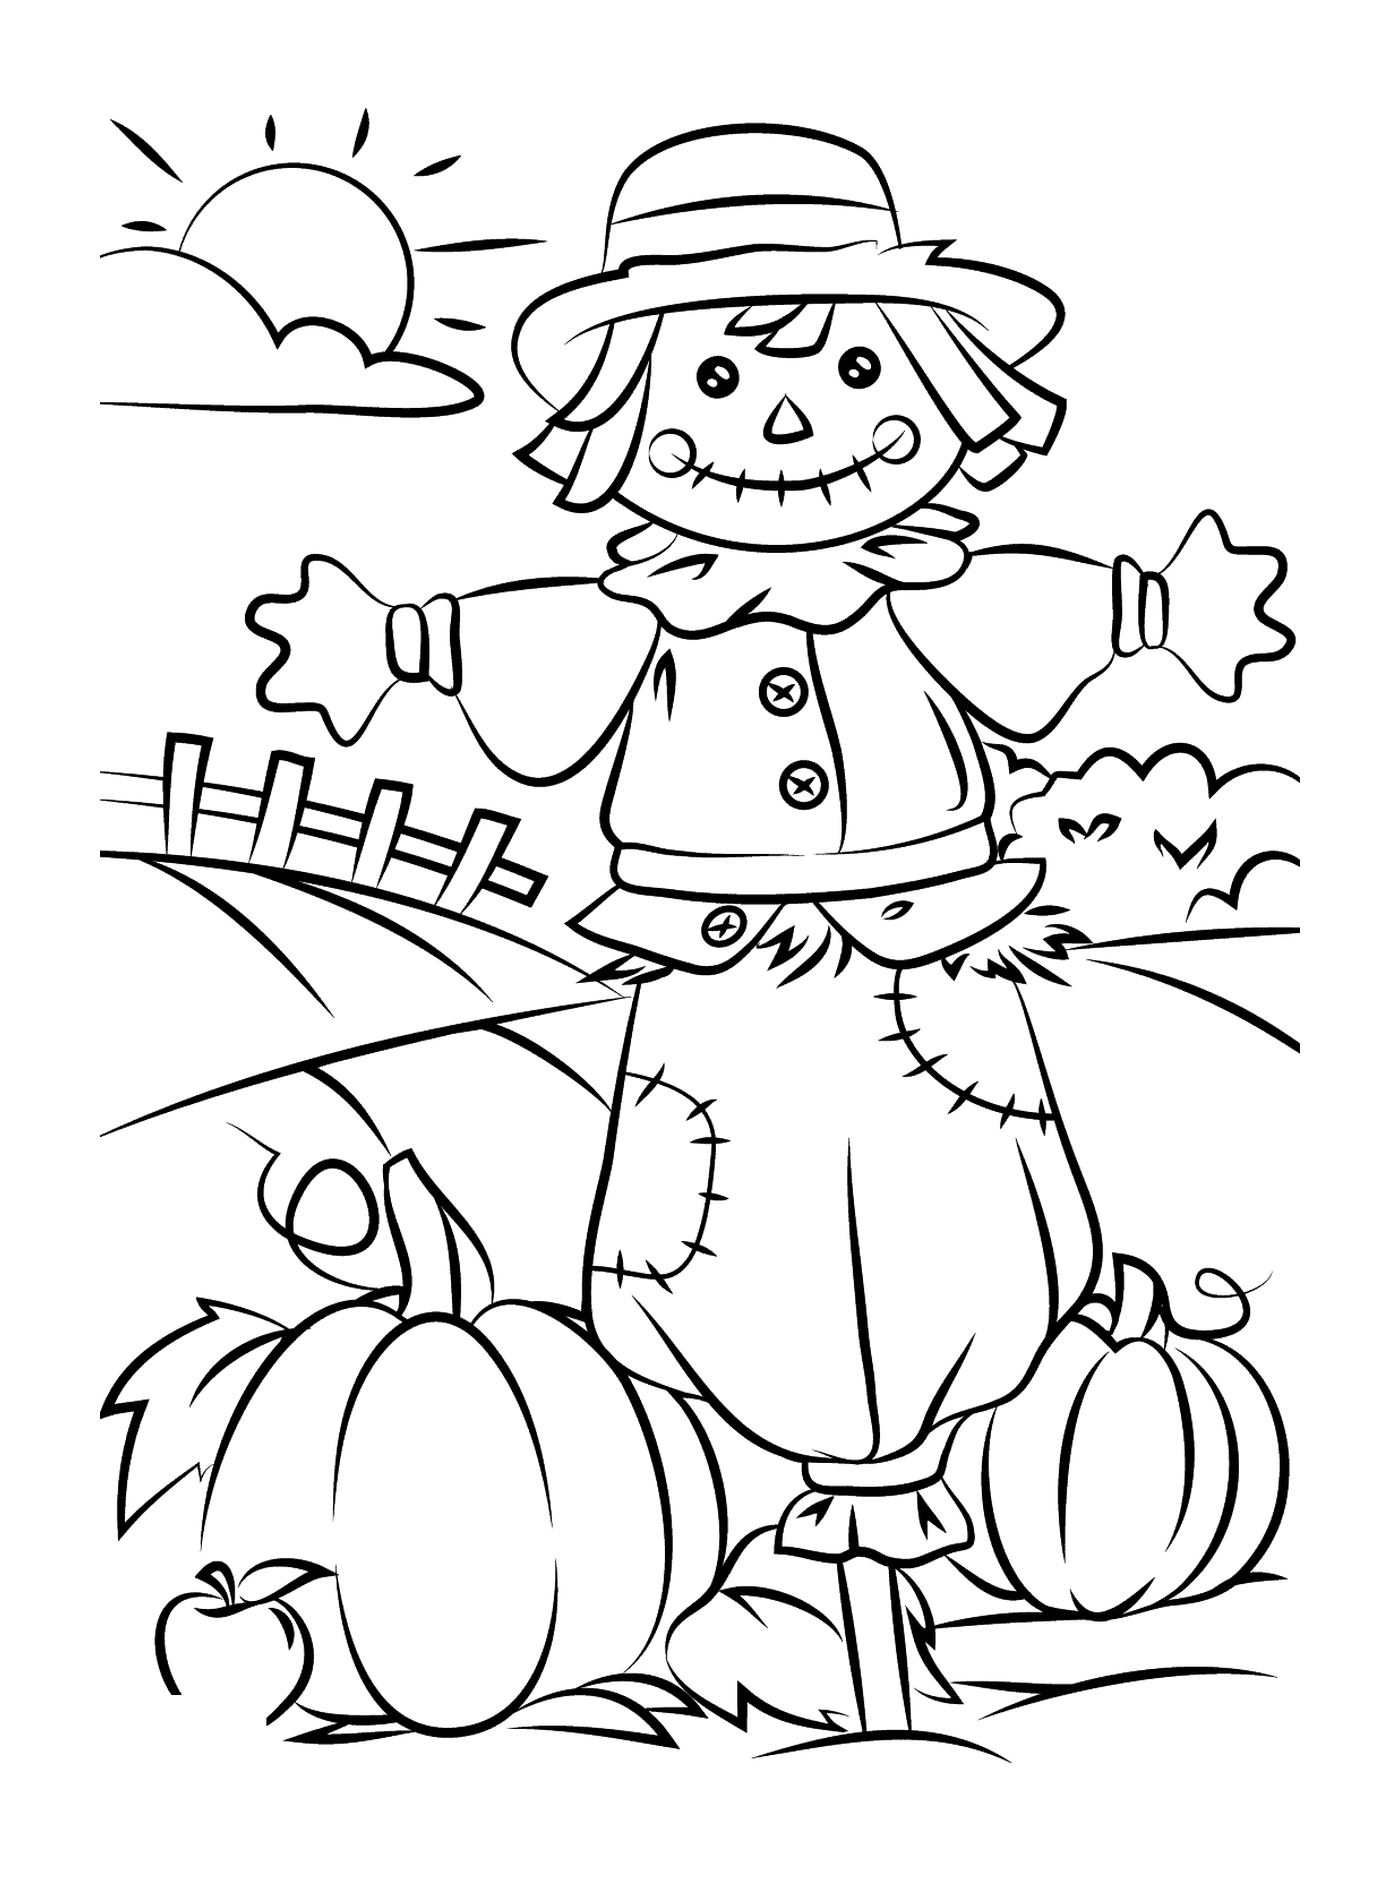  A scarecrow and pumpkins 